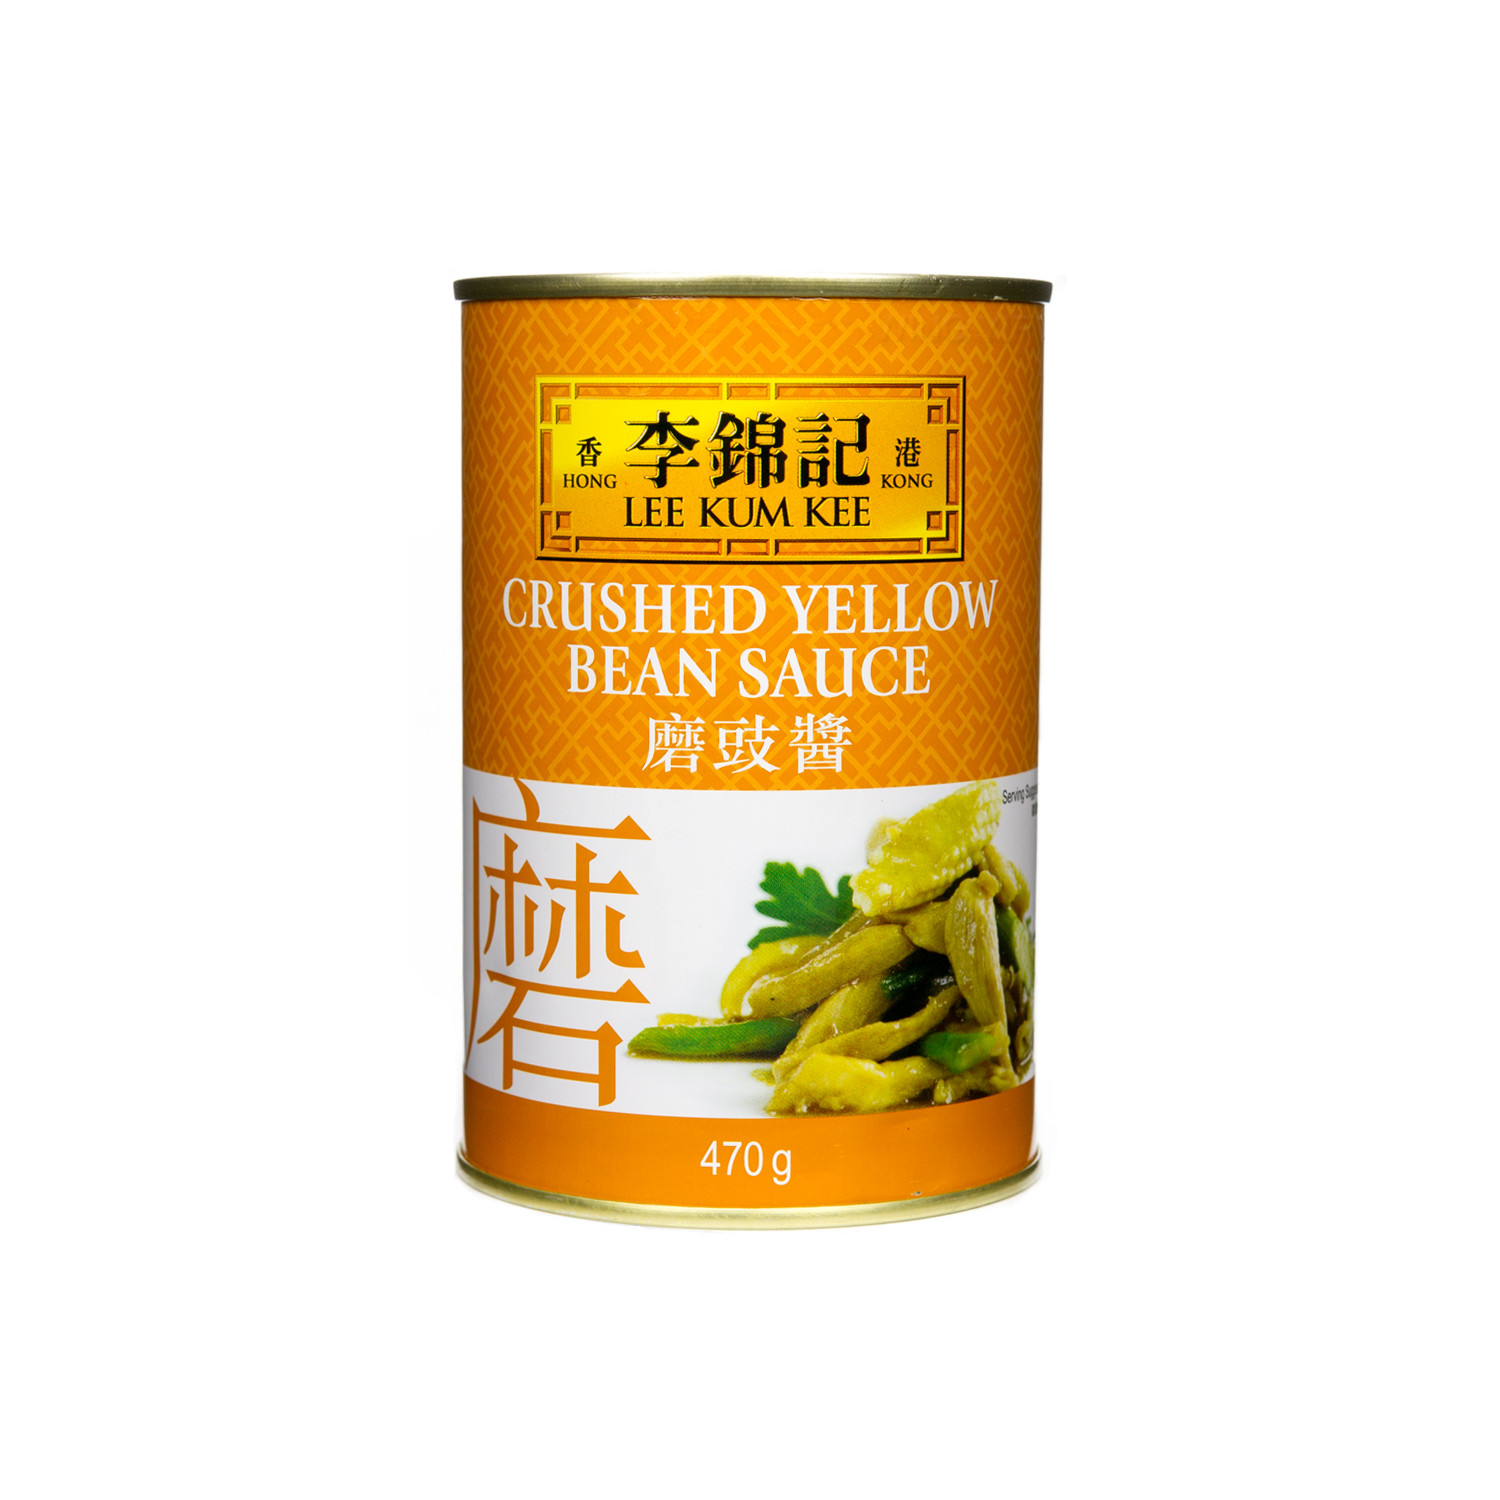 LKK Crushed Yellow Bean Sauce 470g